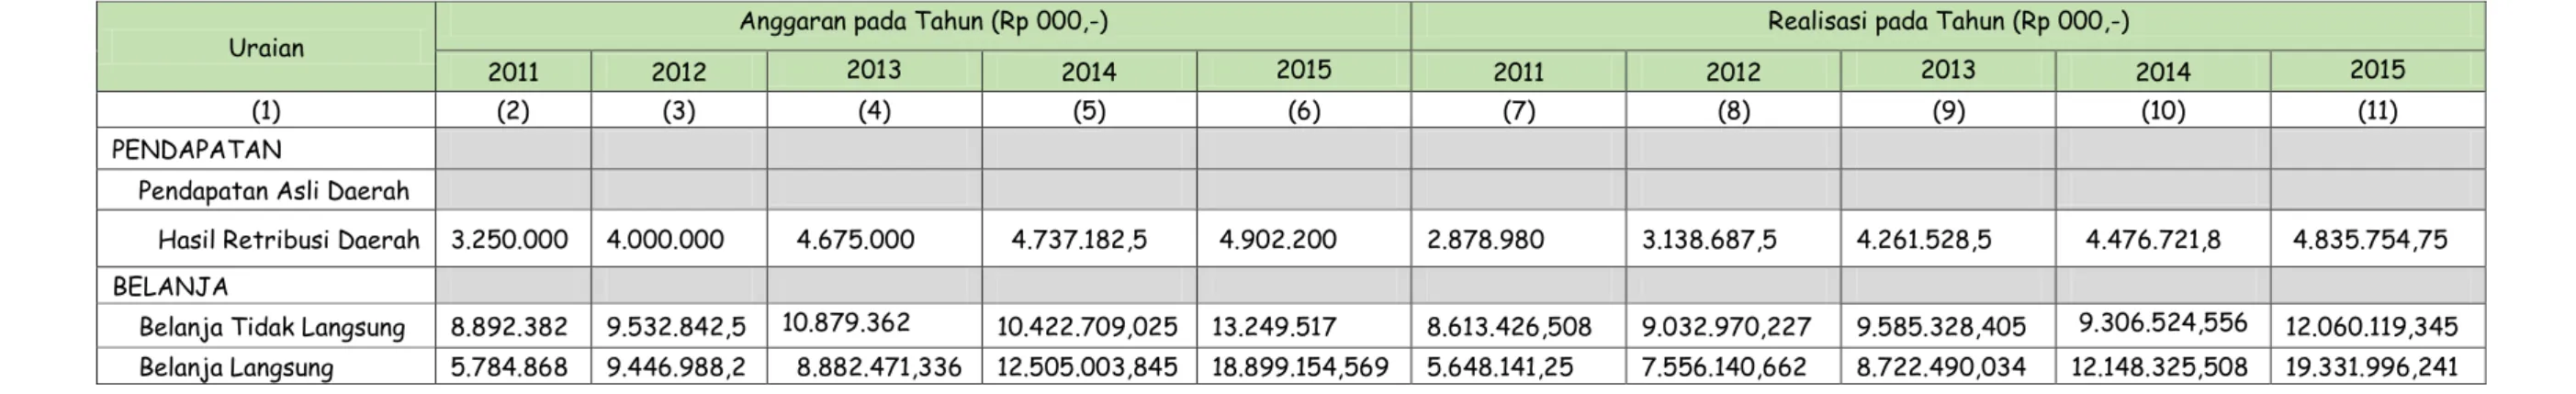 Tabel II-4: Anggaran dan Realisasi Pendanaan Pelayanan DISHUB Kab. Bandung Periode Renstra 2010 – 2015 